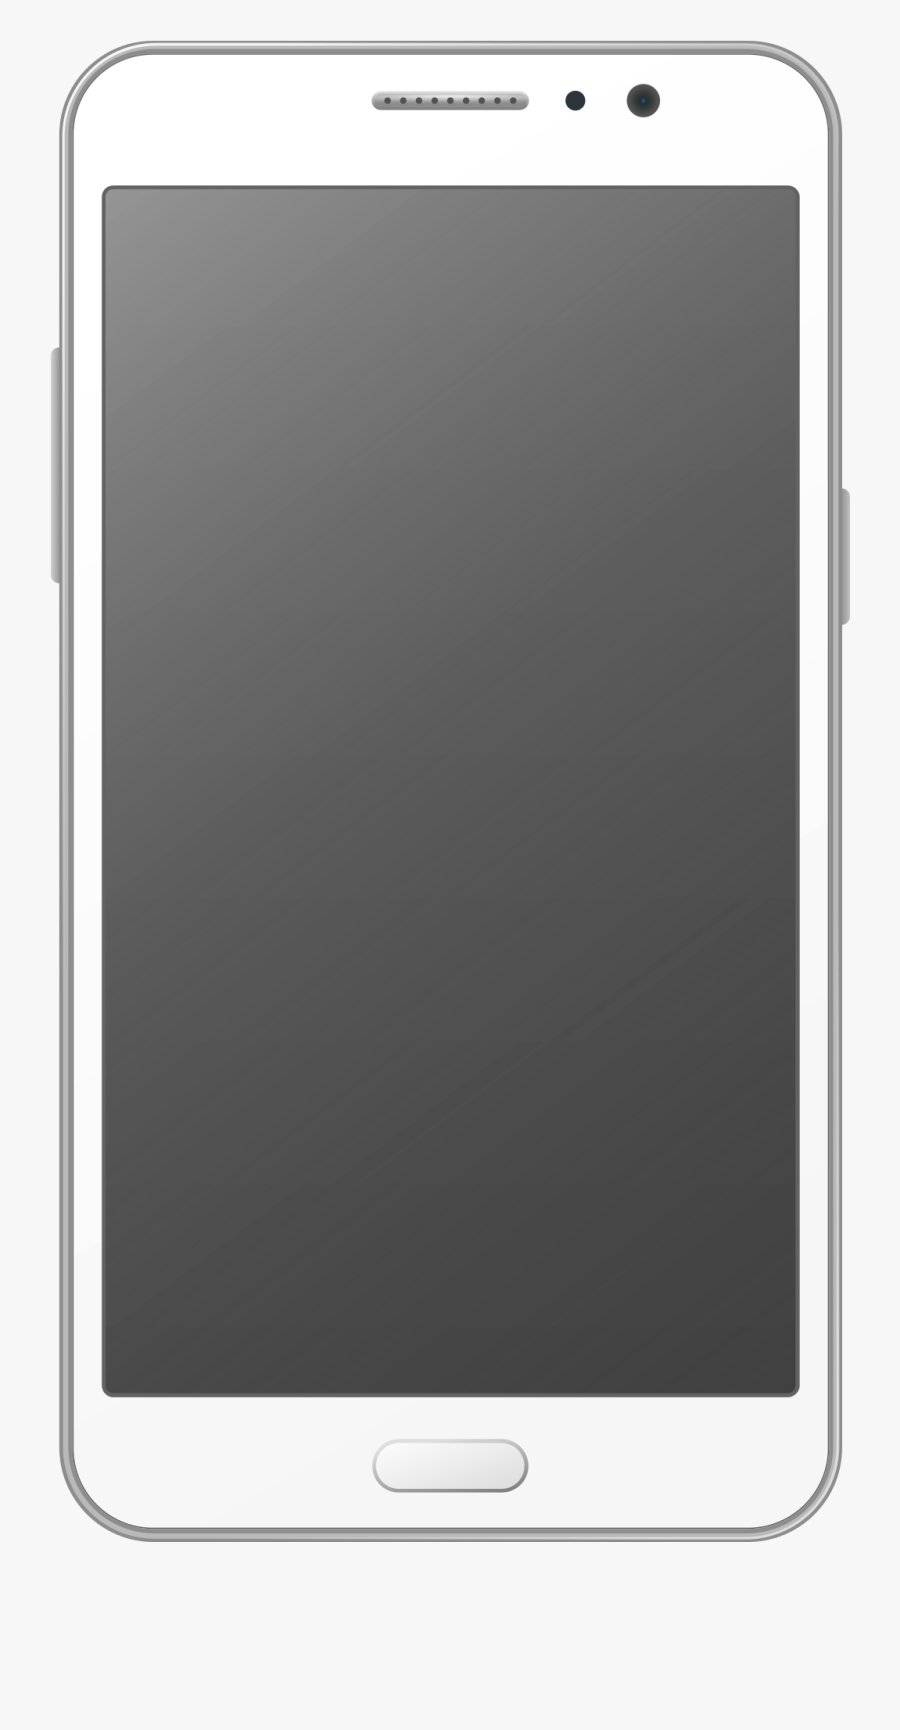 Smartphone Vector Png Transparent Image - Smartphone, Transparent Clipart